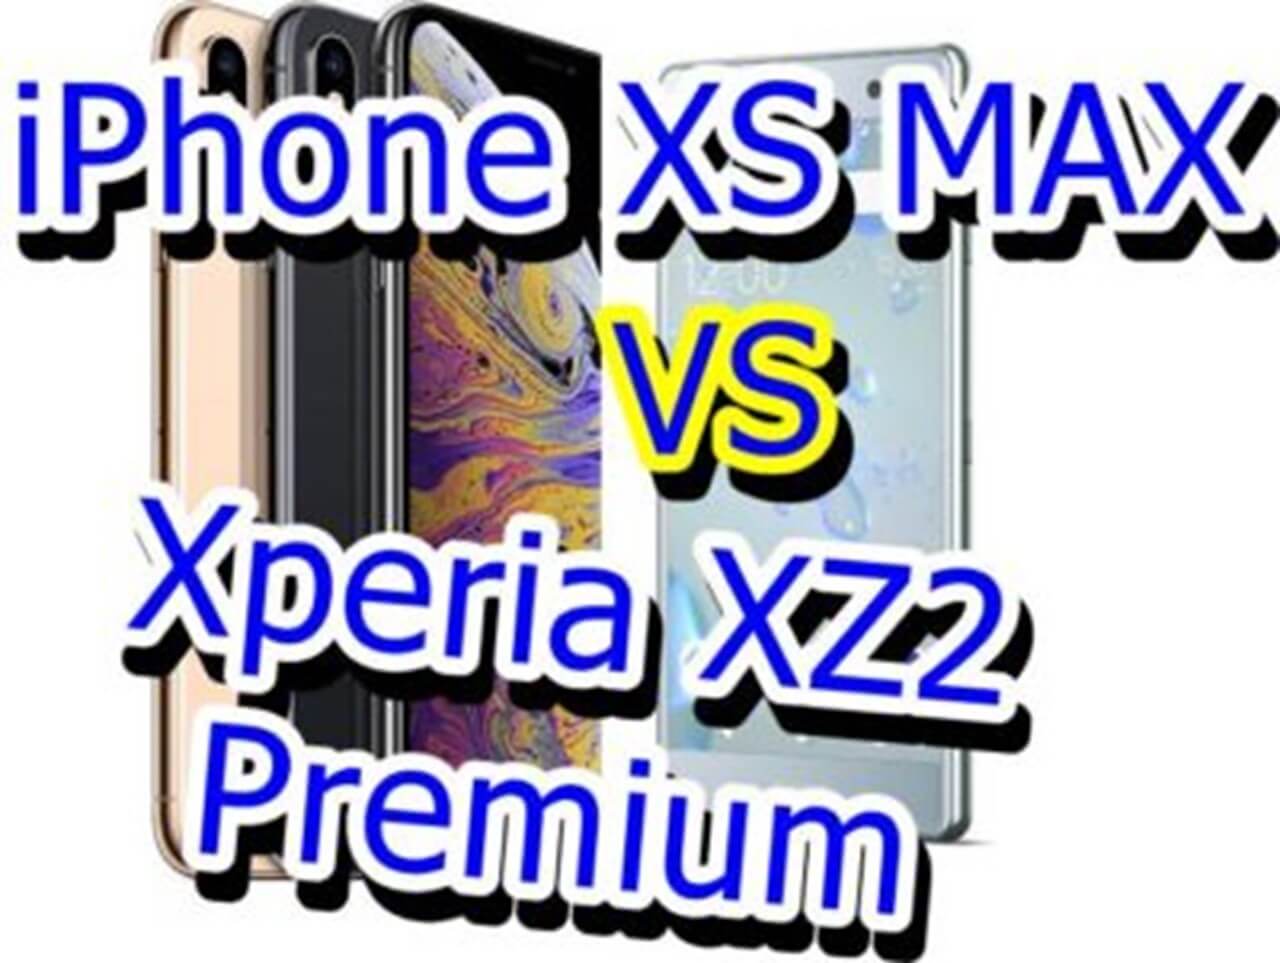 iphone xs max vs Xperia XZ2 Premium